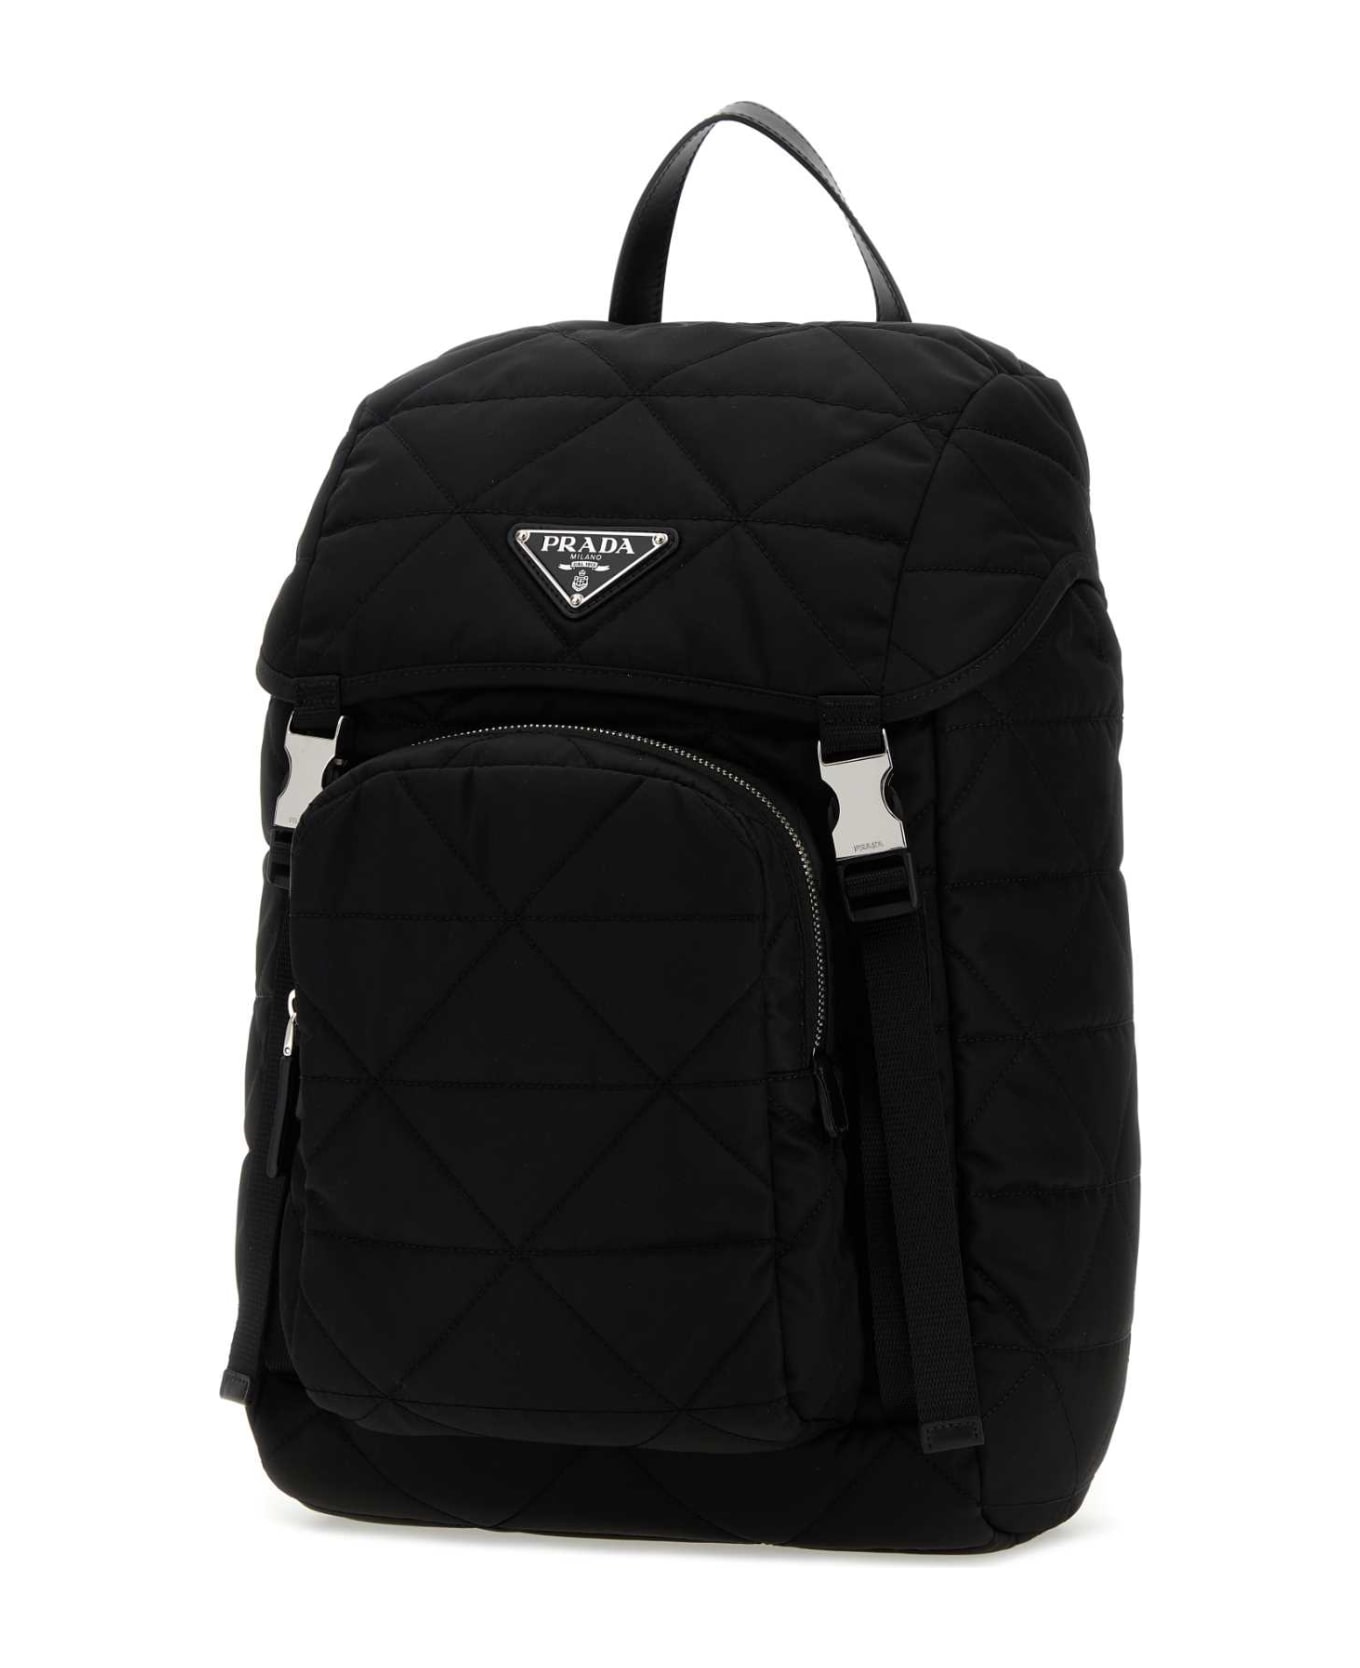 Prada Black Fabric Backpack - NERO